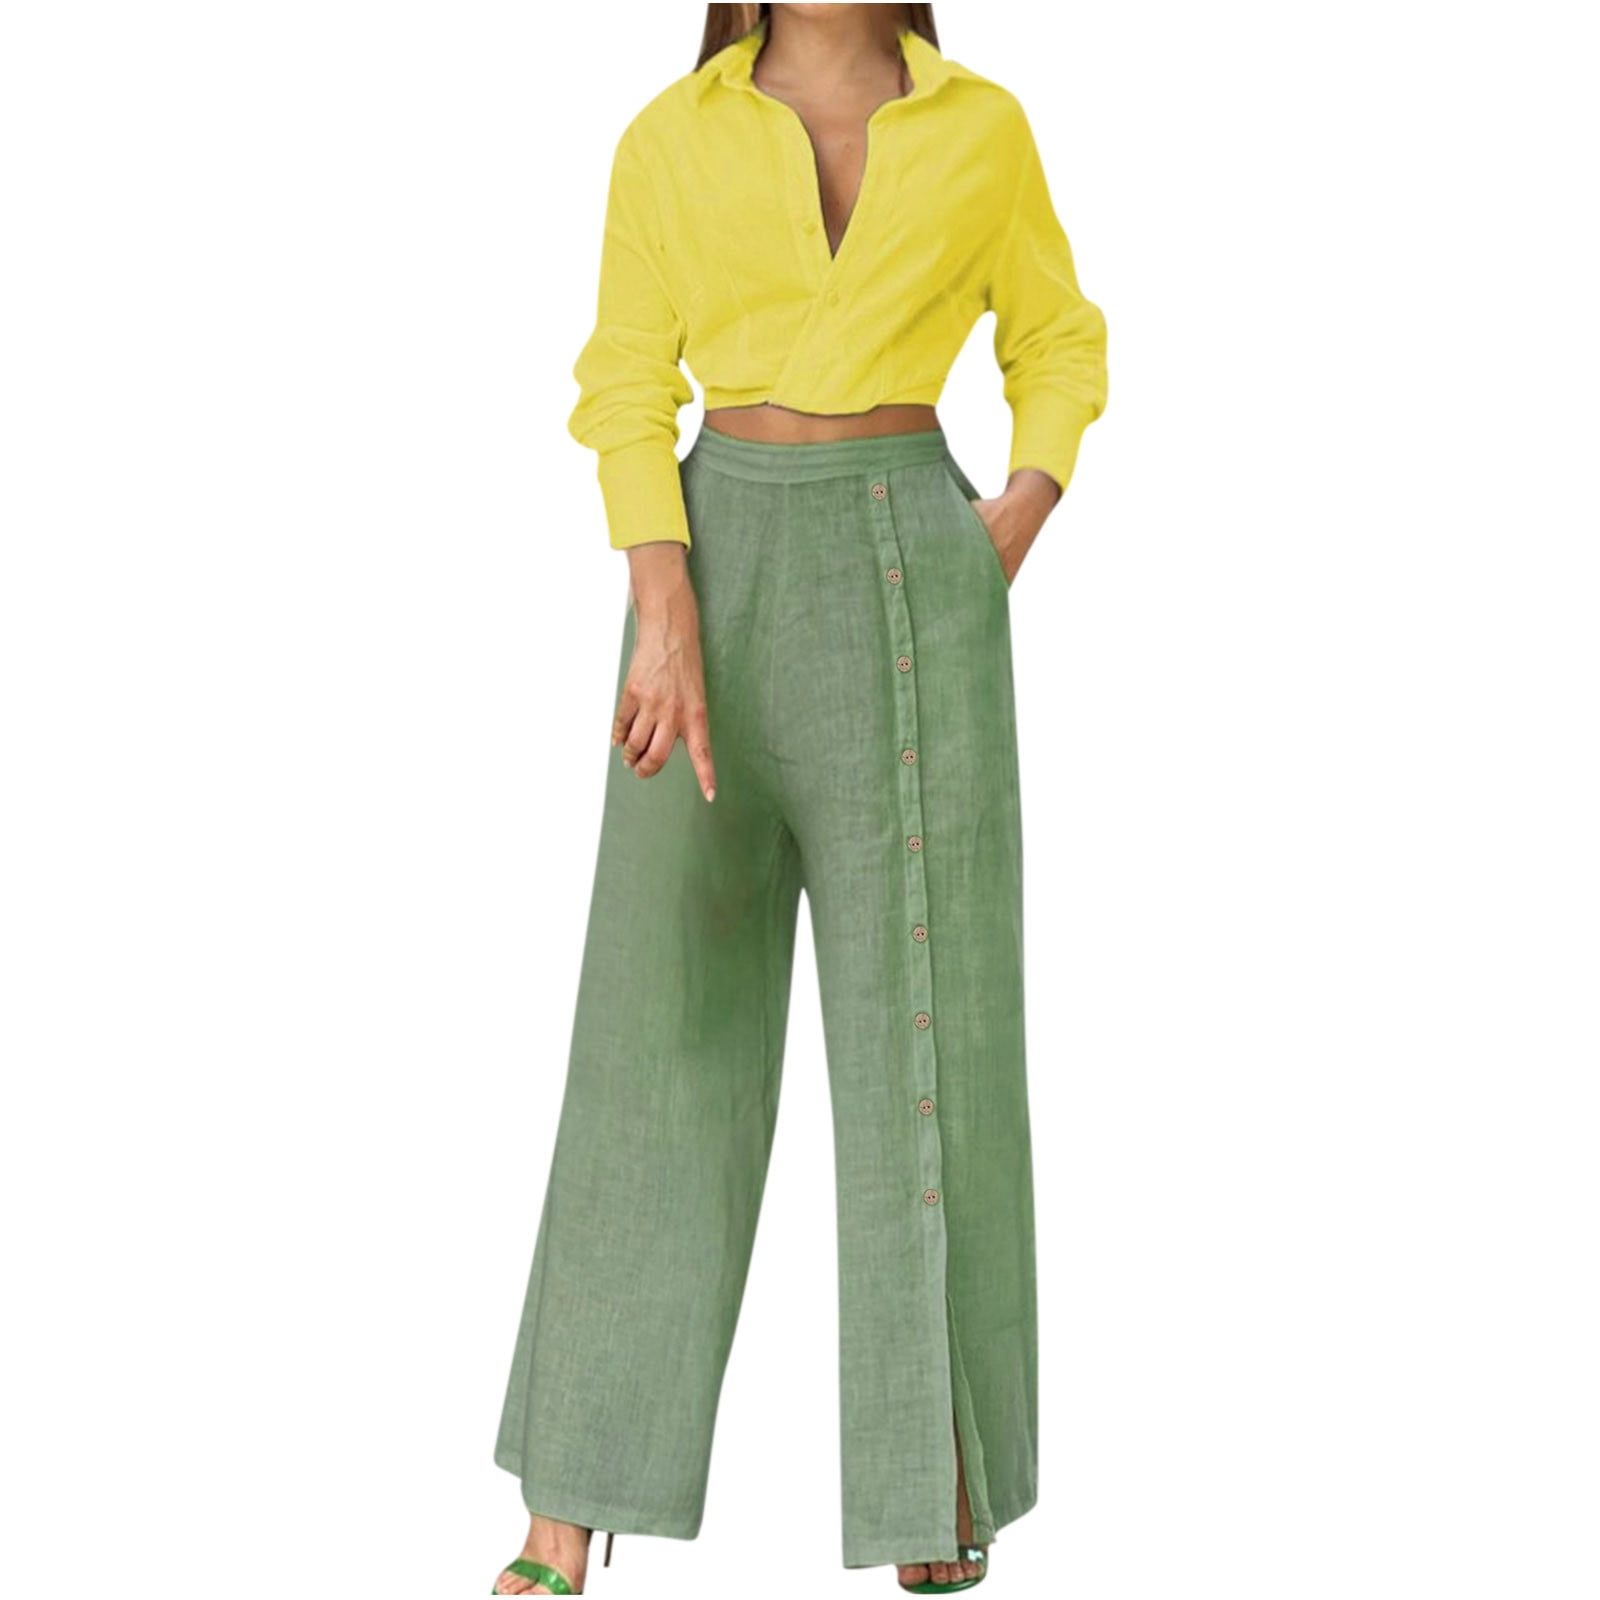 XFLWAM Women's Cotton Linen 2 Piece Outfits Long Sleeve Button